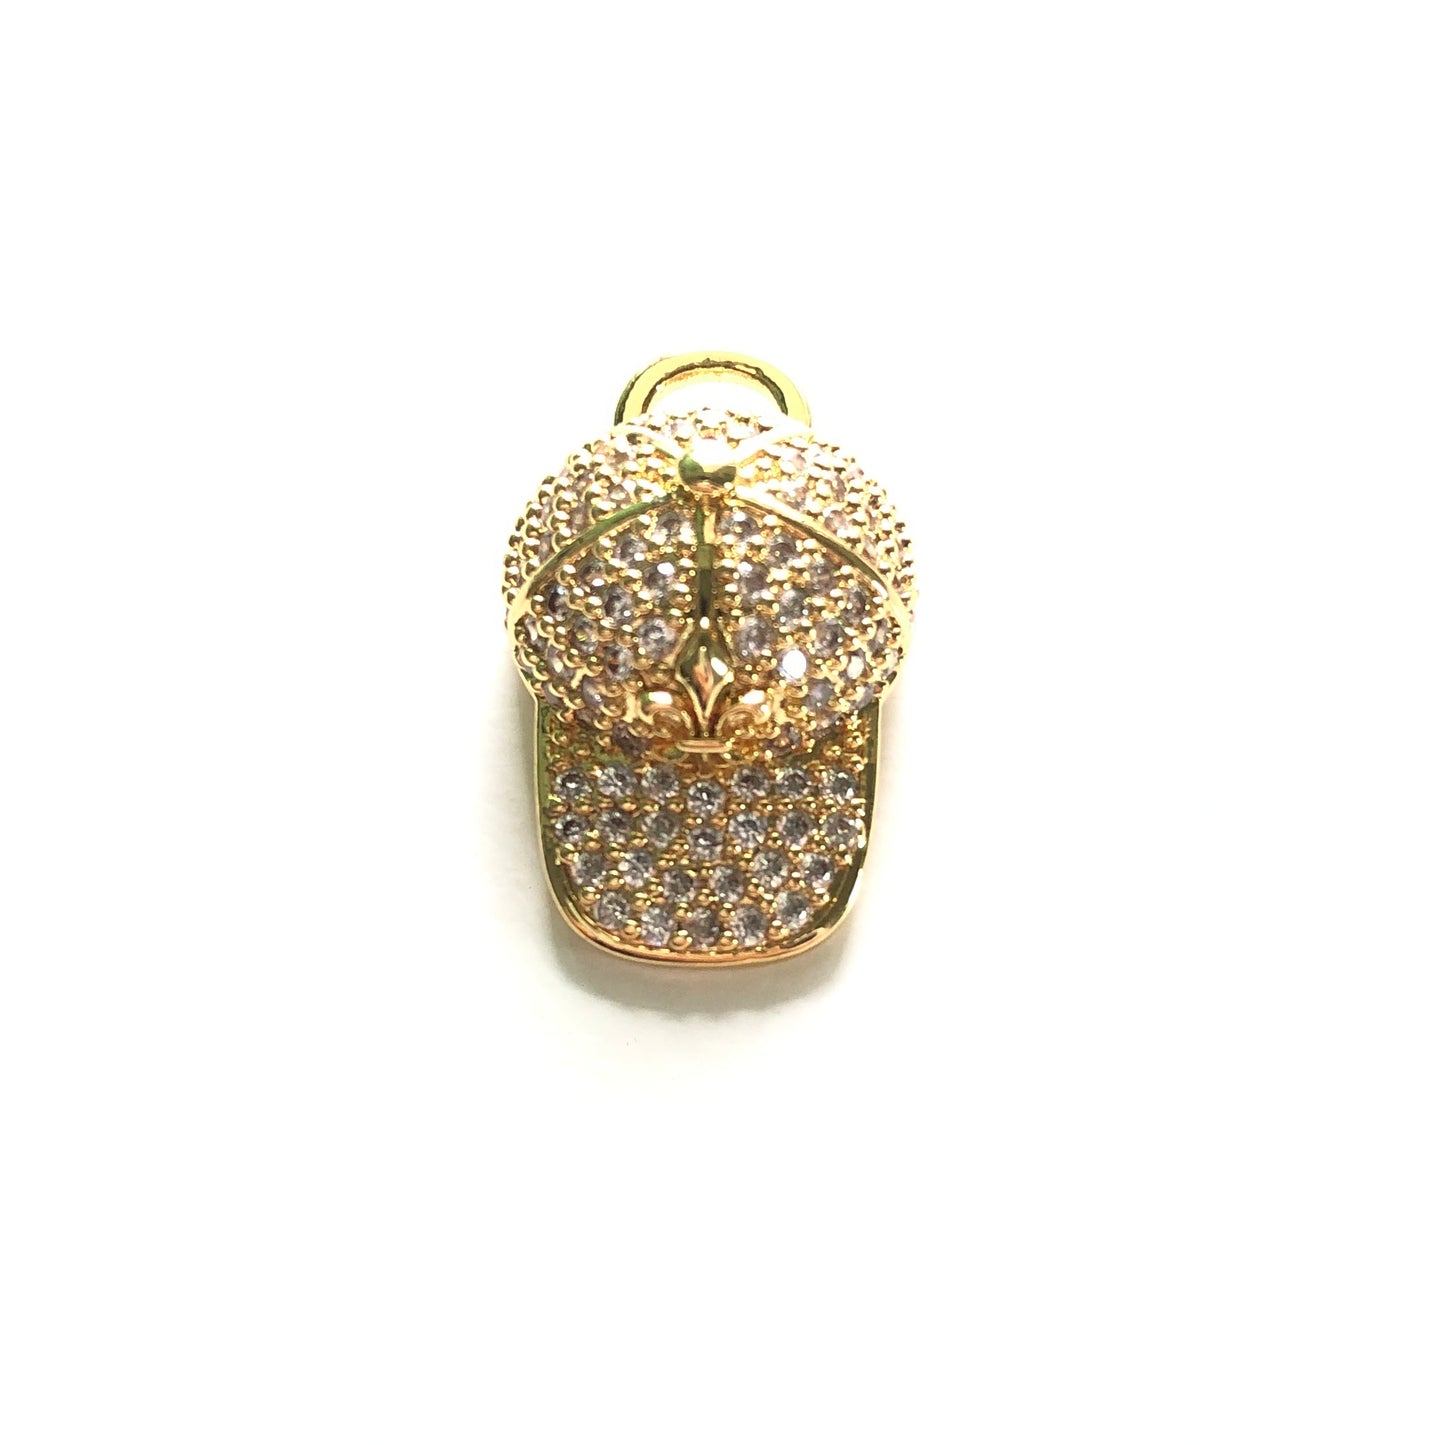 10pcs/lot 25*16mm CZ Pave Fleur De Lis BaseBall Cap Saints Charms Gold CZ Paved Charms Fashion Louisiana Inspired On Sale Charms Beads Beyond